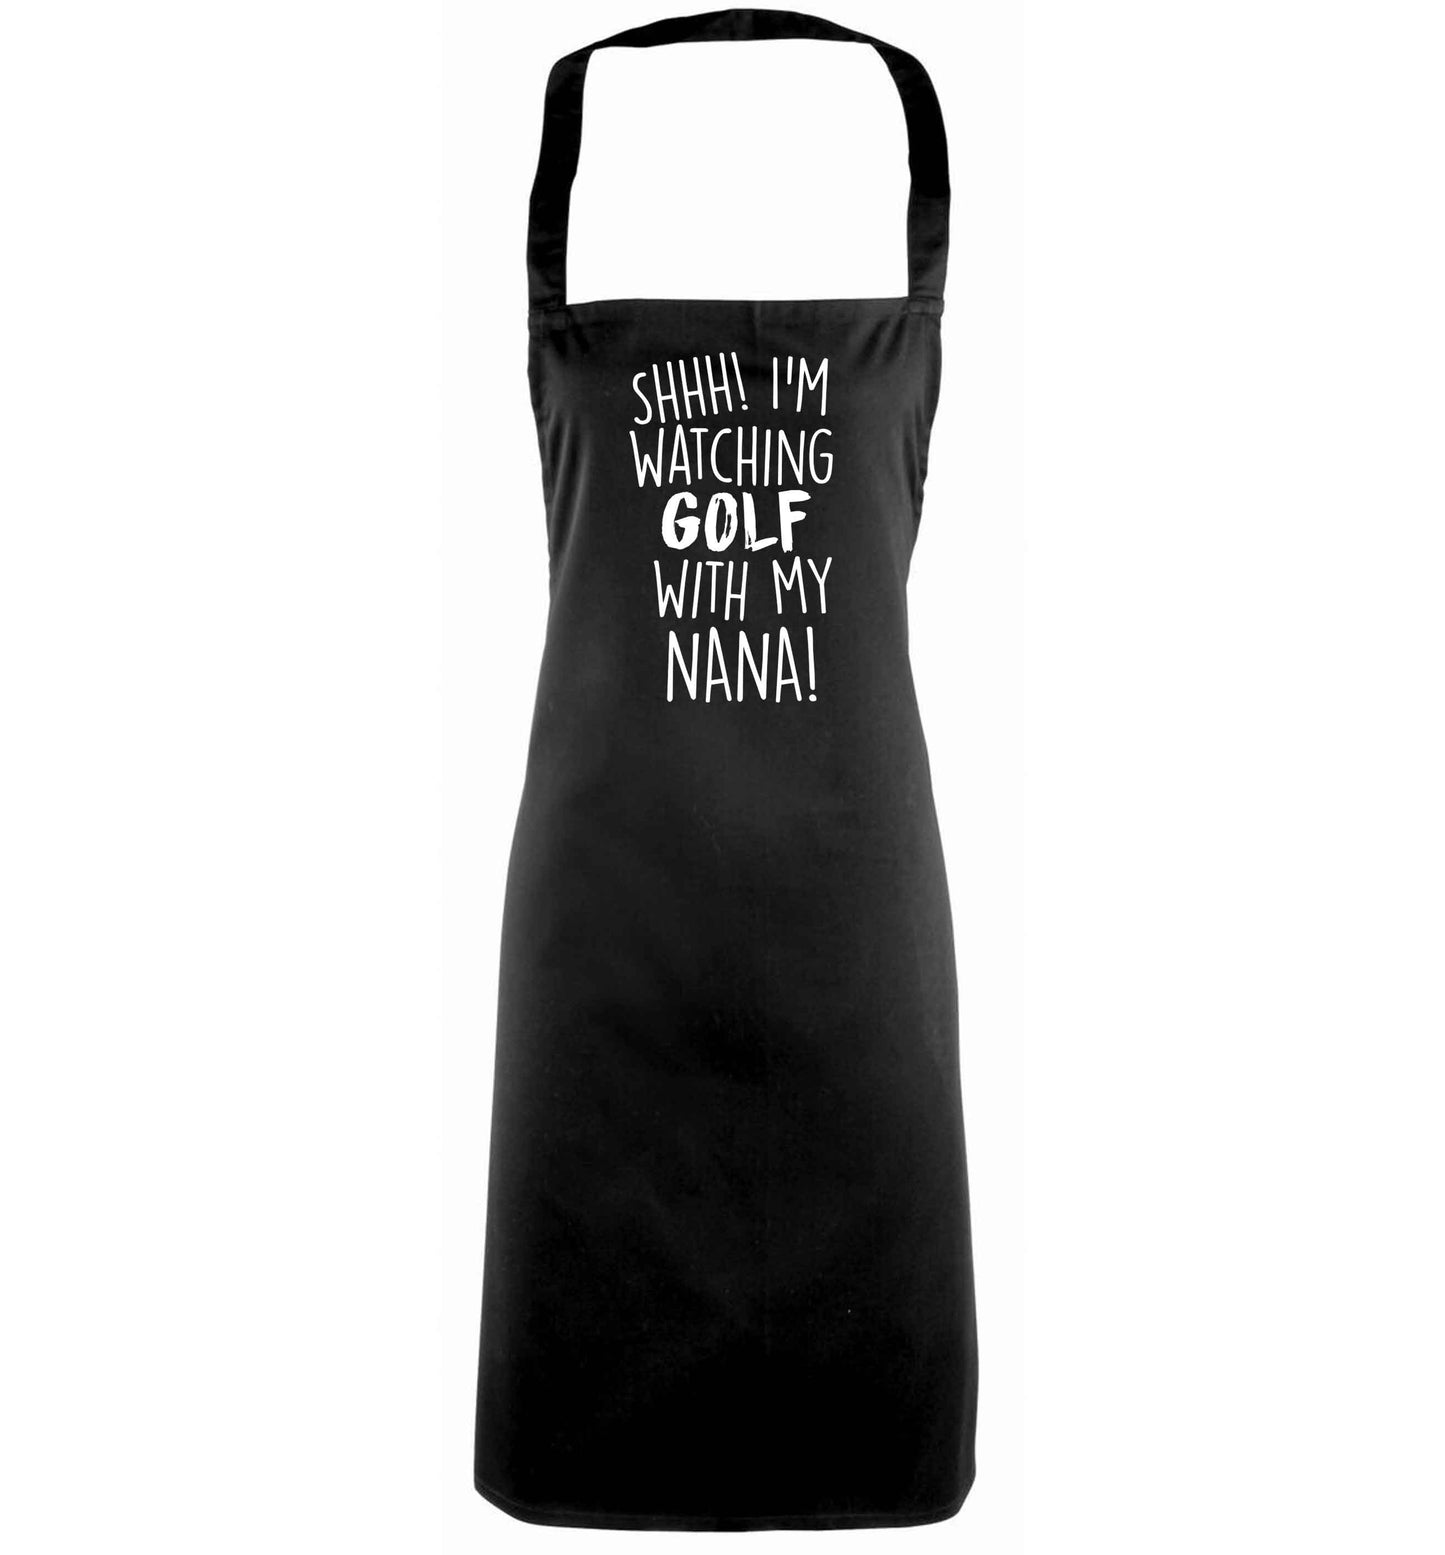 Shh I'm watching golf with my nana black apron